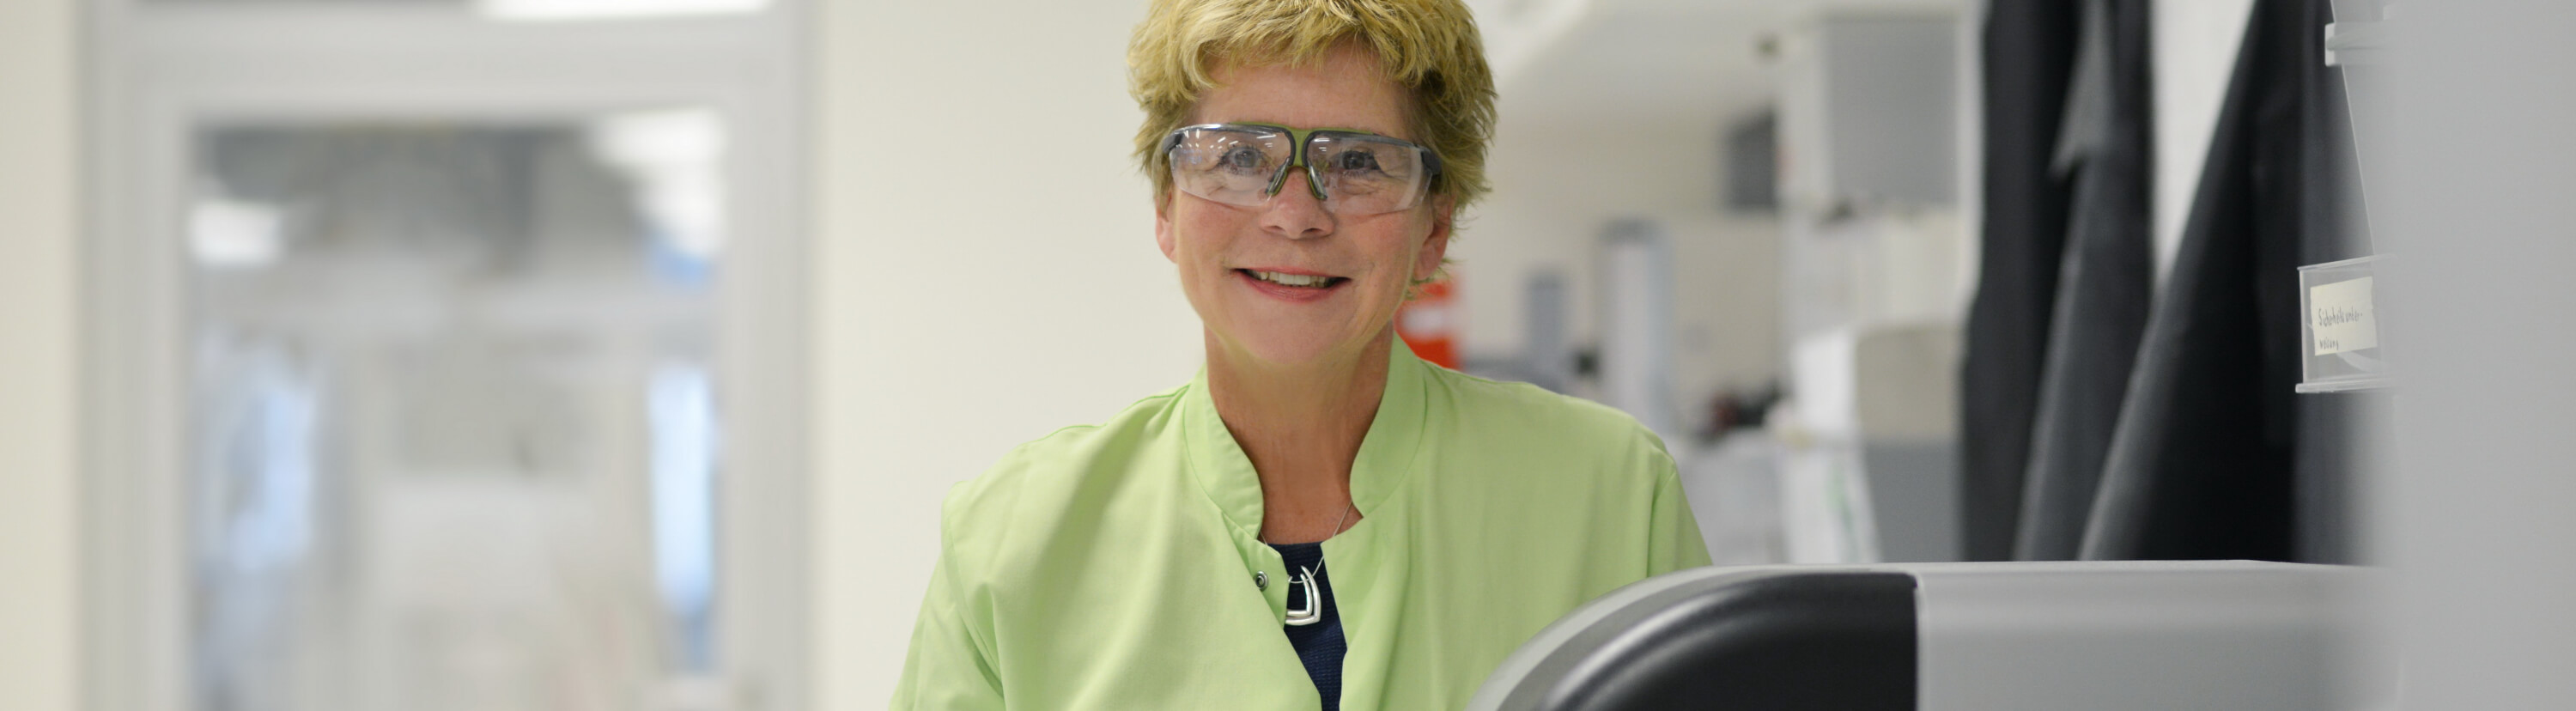 Gillian Burgess, Head of Research Grünenthal